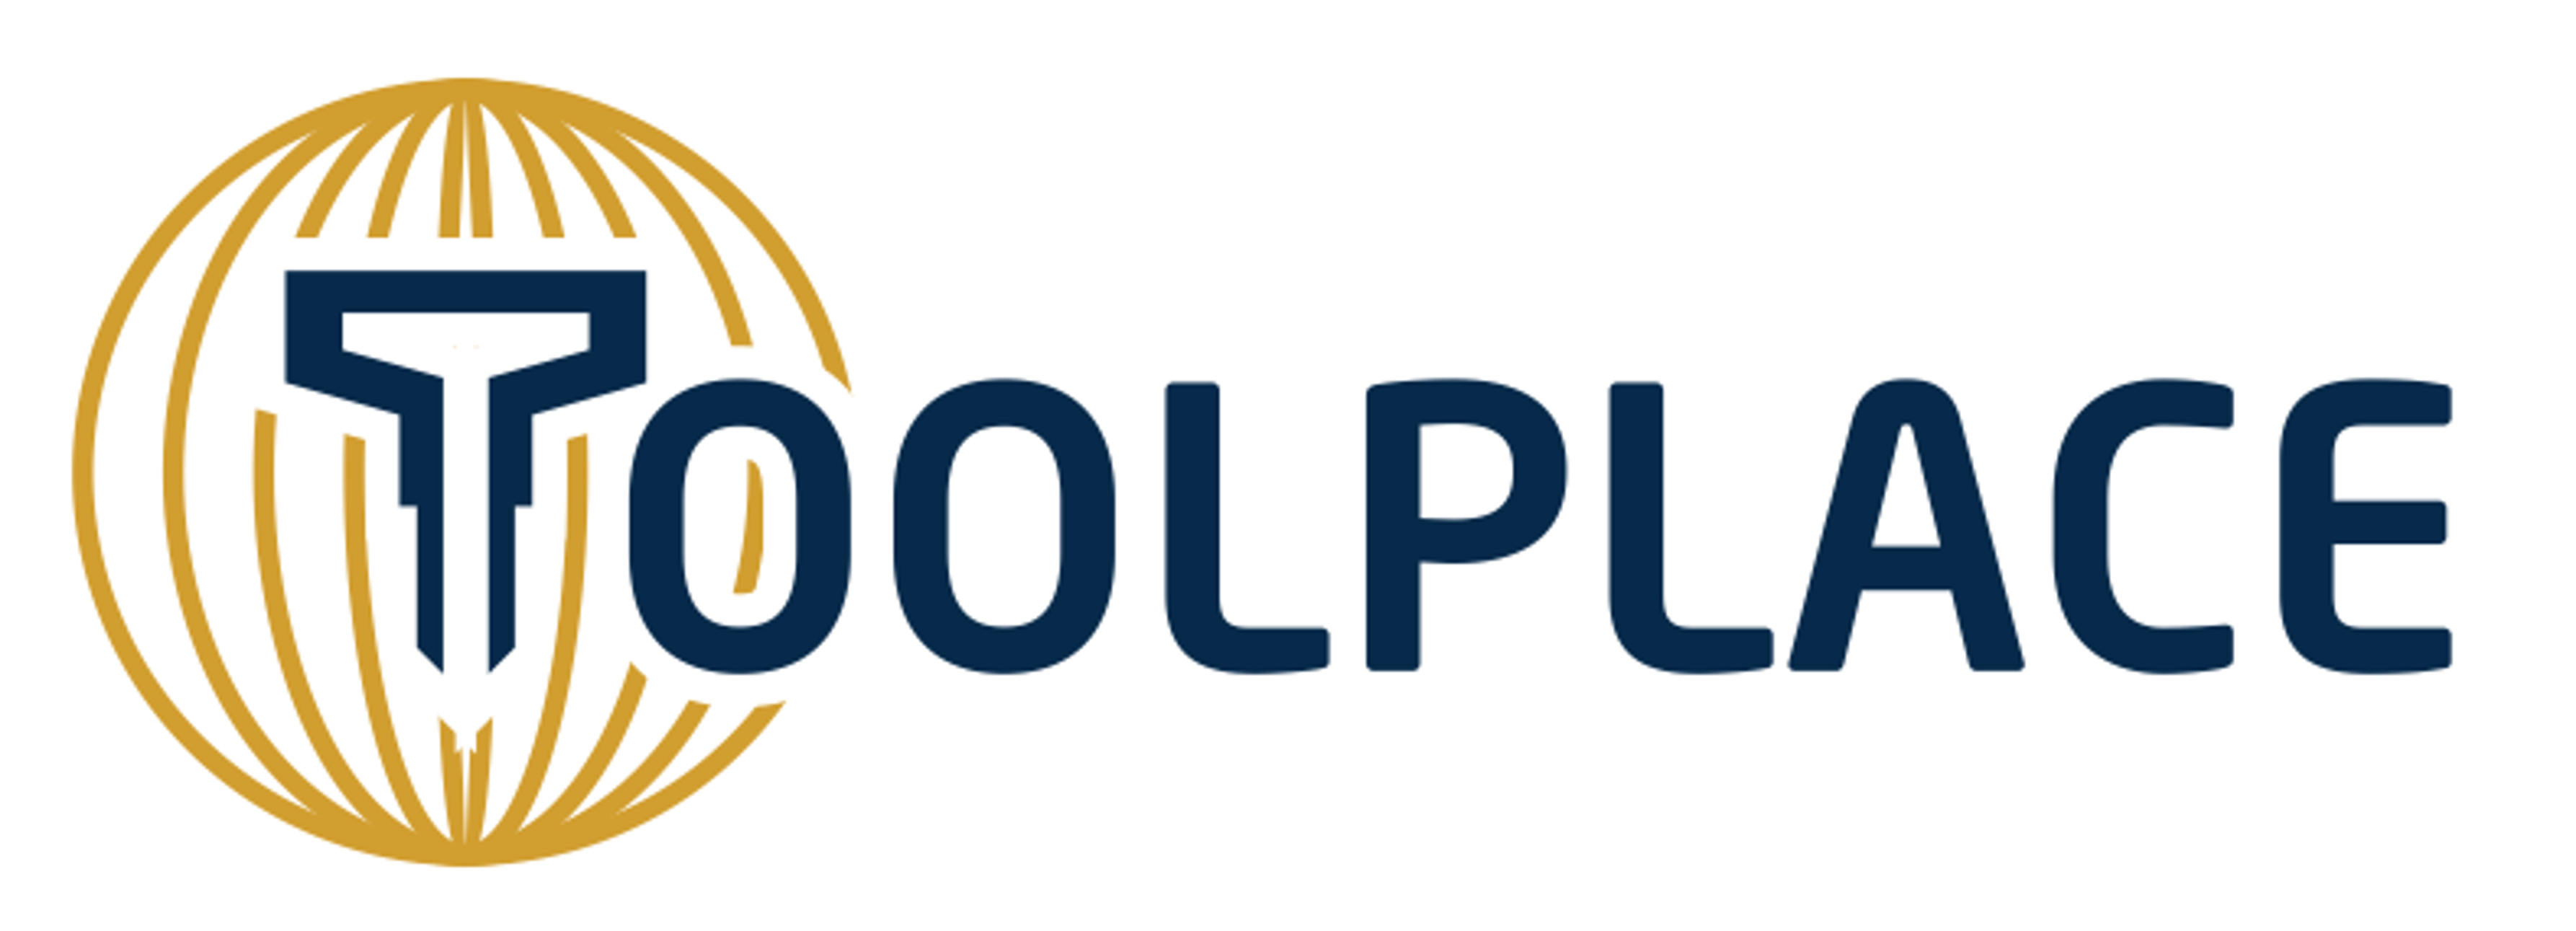 Logo TOOLPLACE